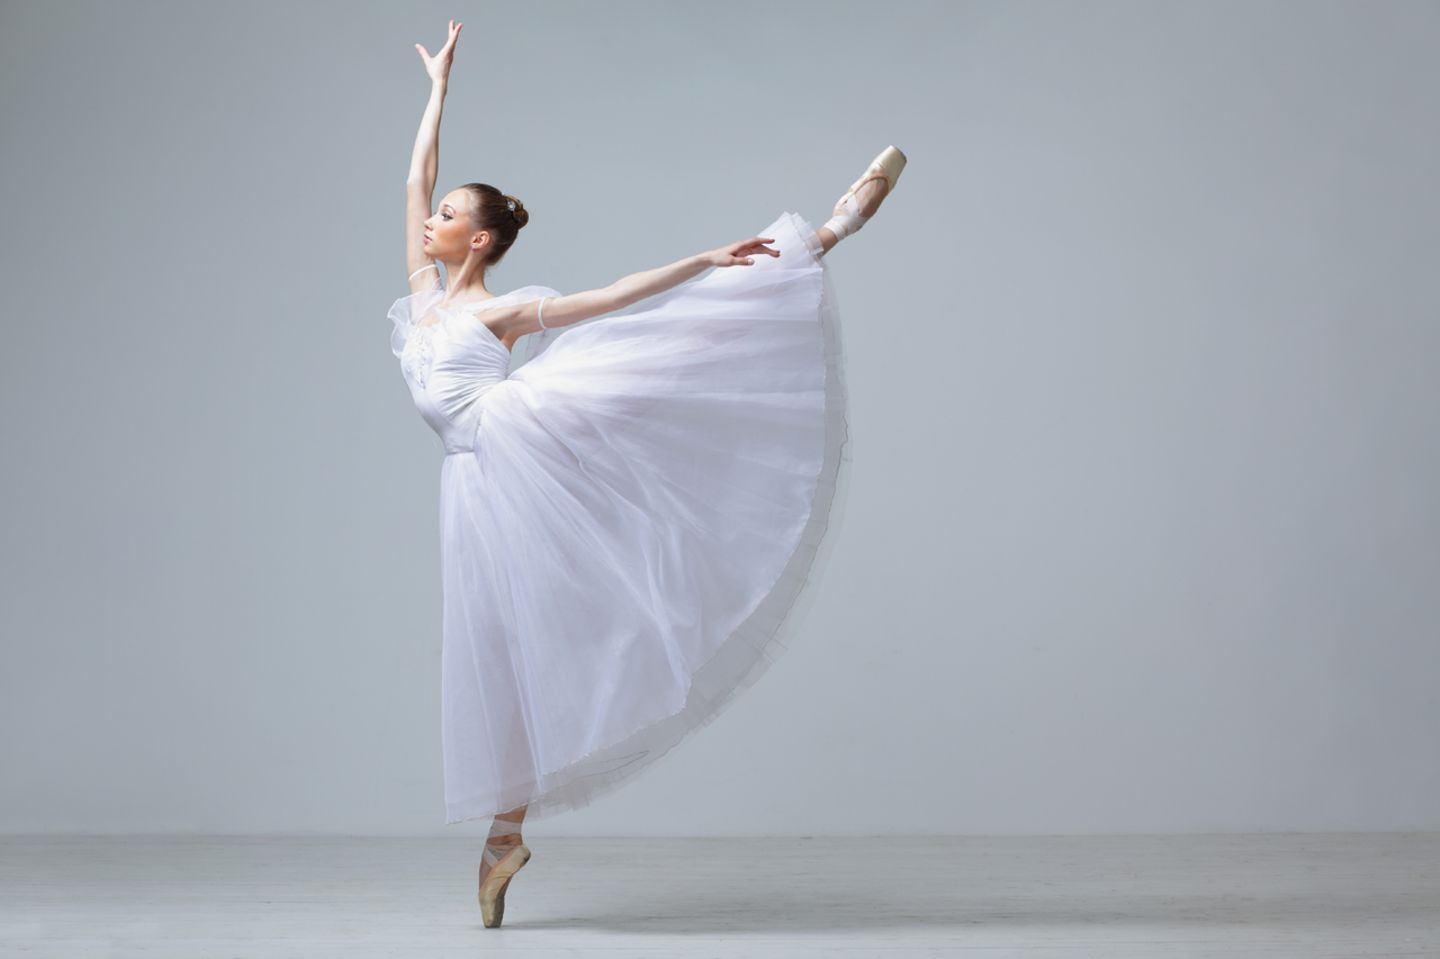 Beruf: Ballerina beim Tanz